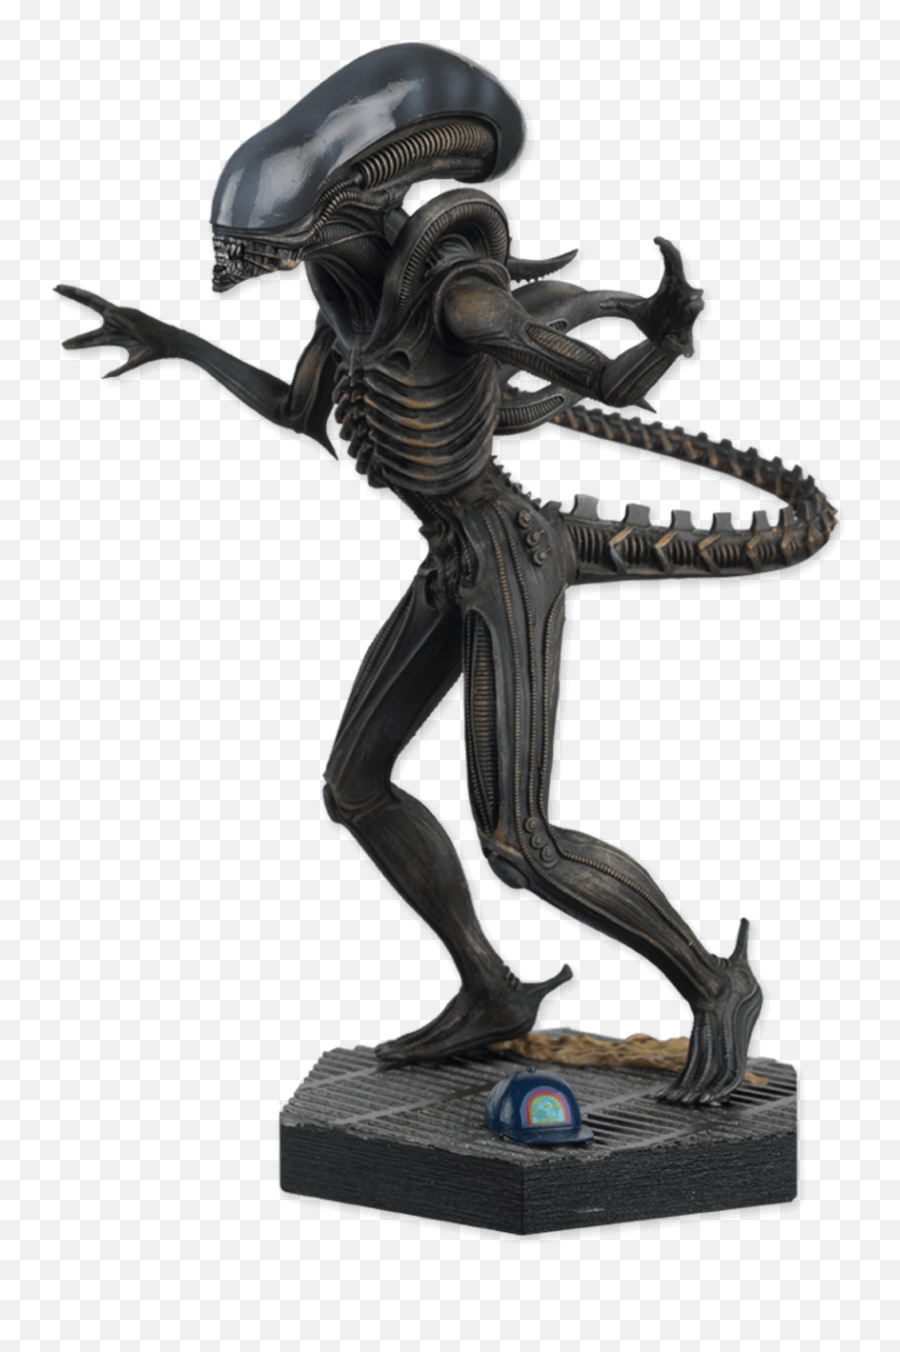 Alien Xenomorph Png - Alien And Predator Figurine Collection Alien Xenomorph,Alien Vs Predator Logo